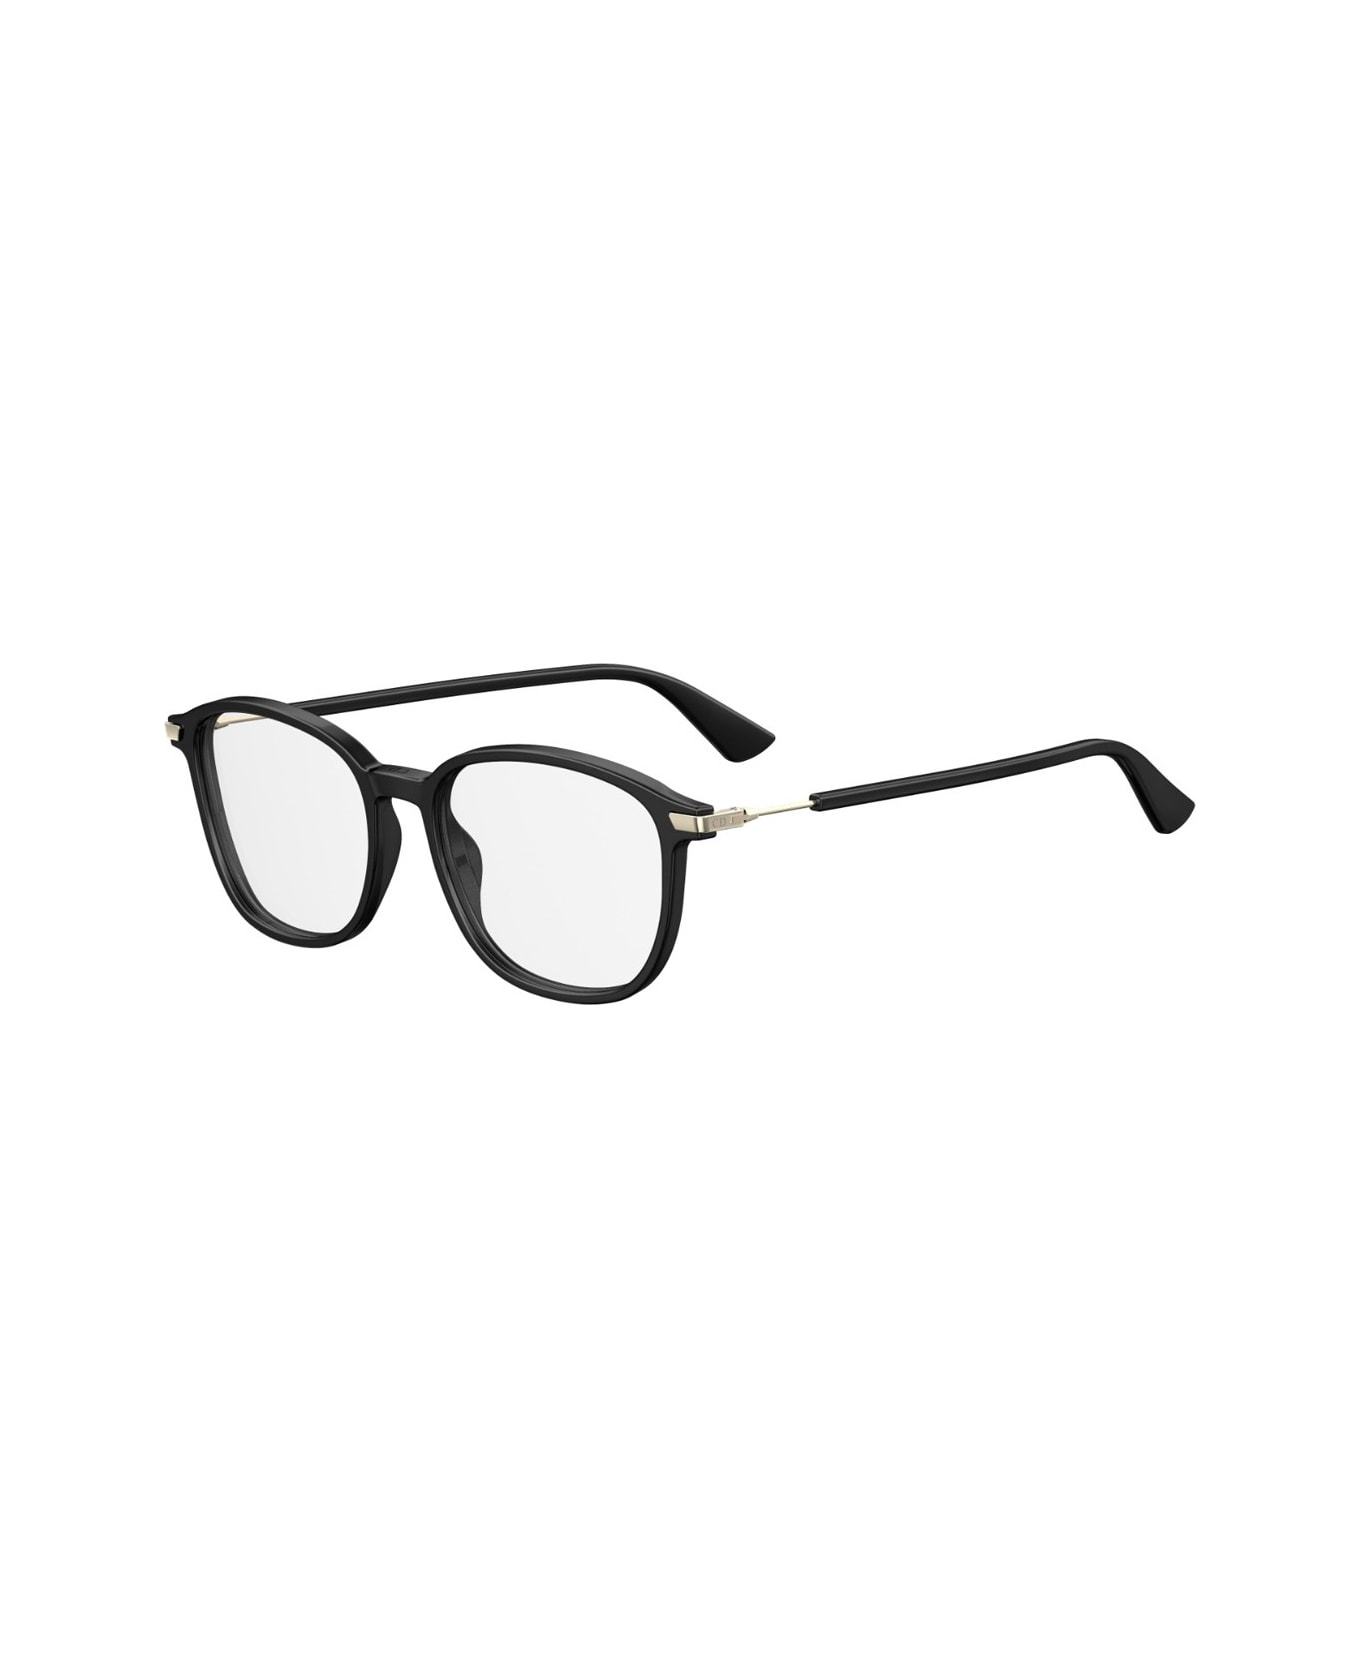 Dior Eyewear Essence 7 Glasses - Nero アイウェア